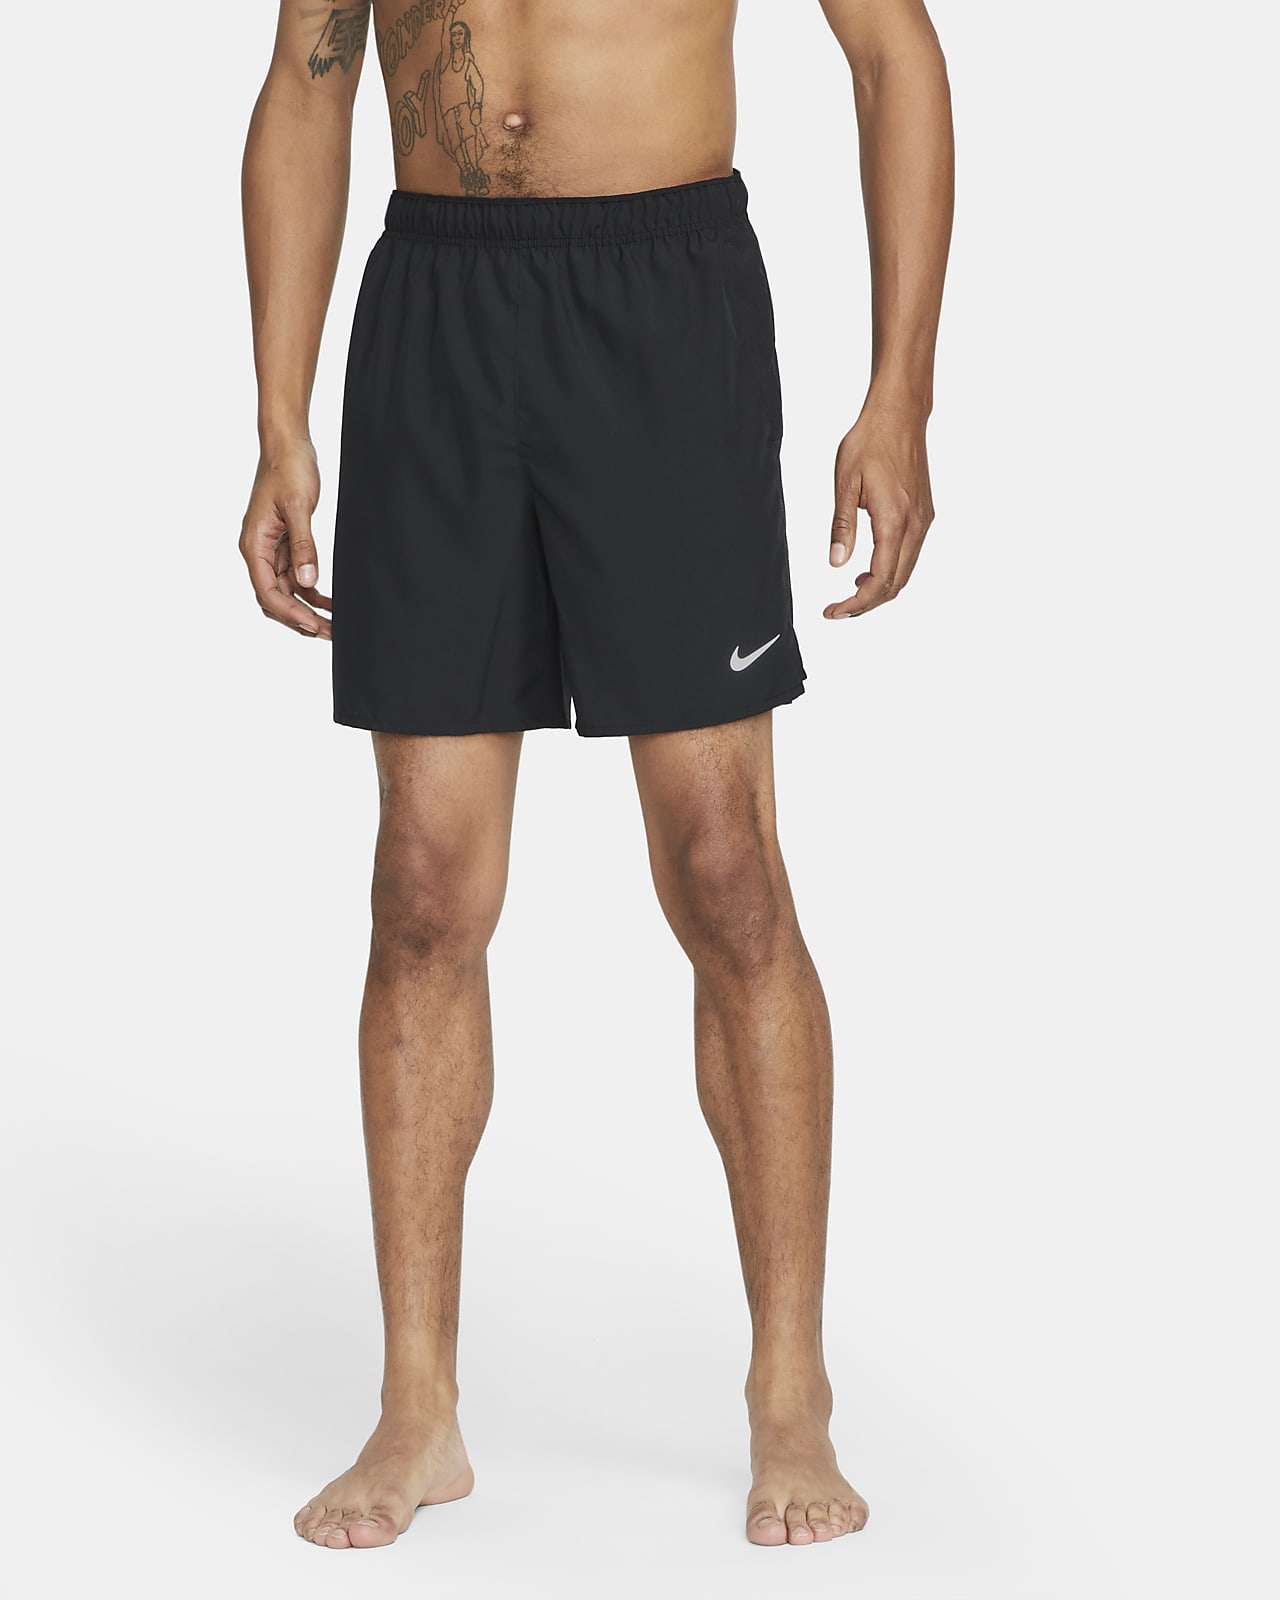 Shorts de running sin forro Dri-FIT de 18 cm para hombre Nike Challenger